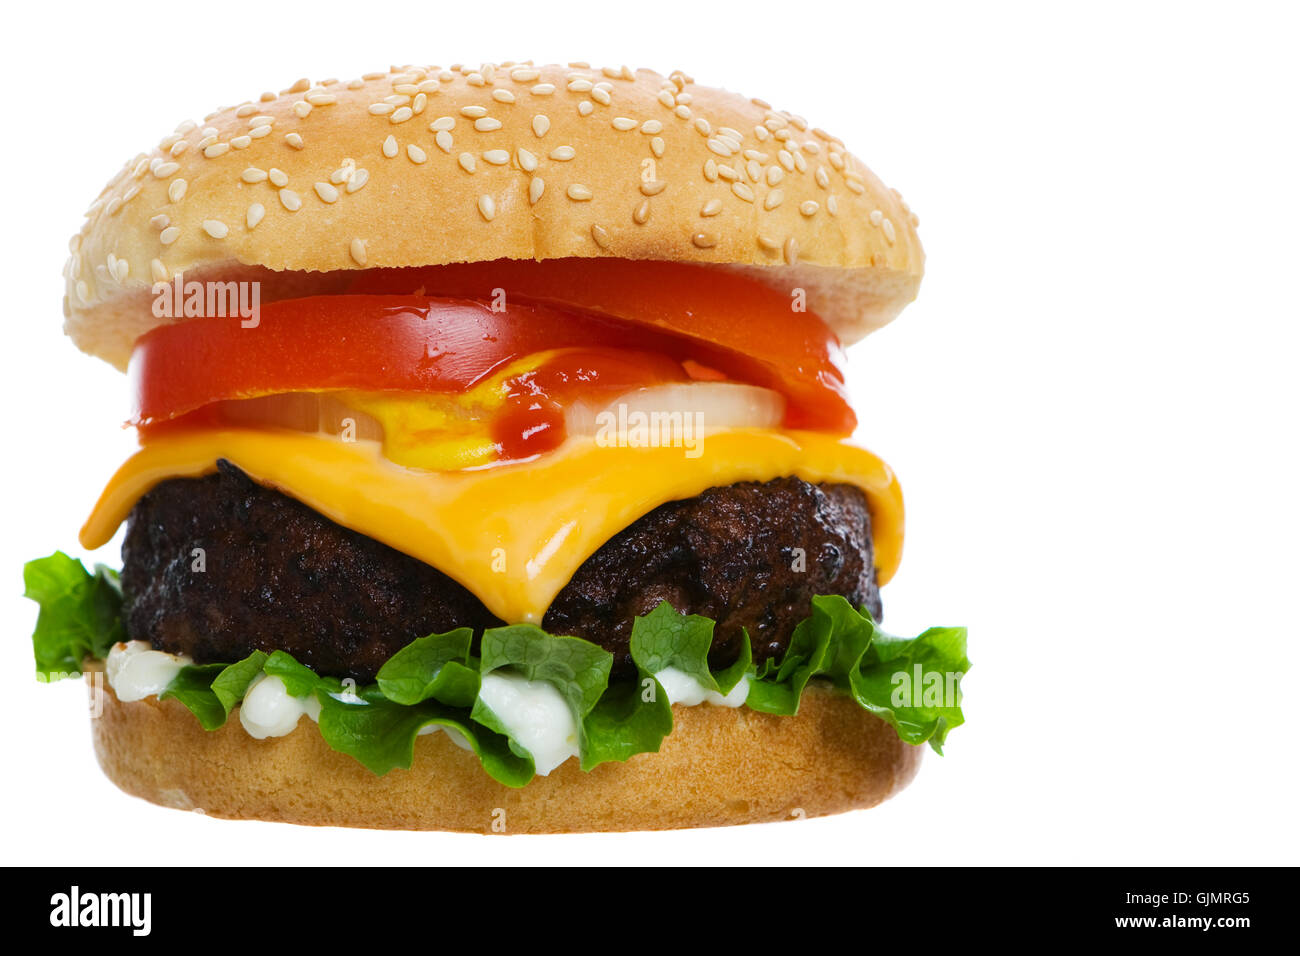 diet juicy hamburger Stock Photo